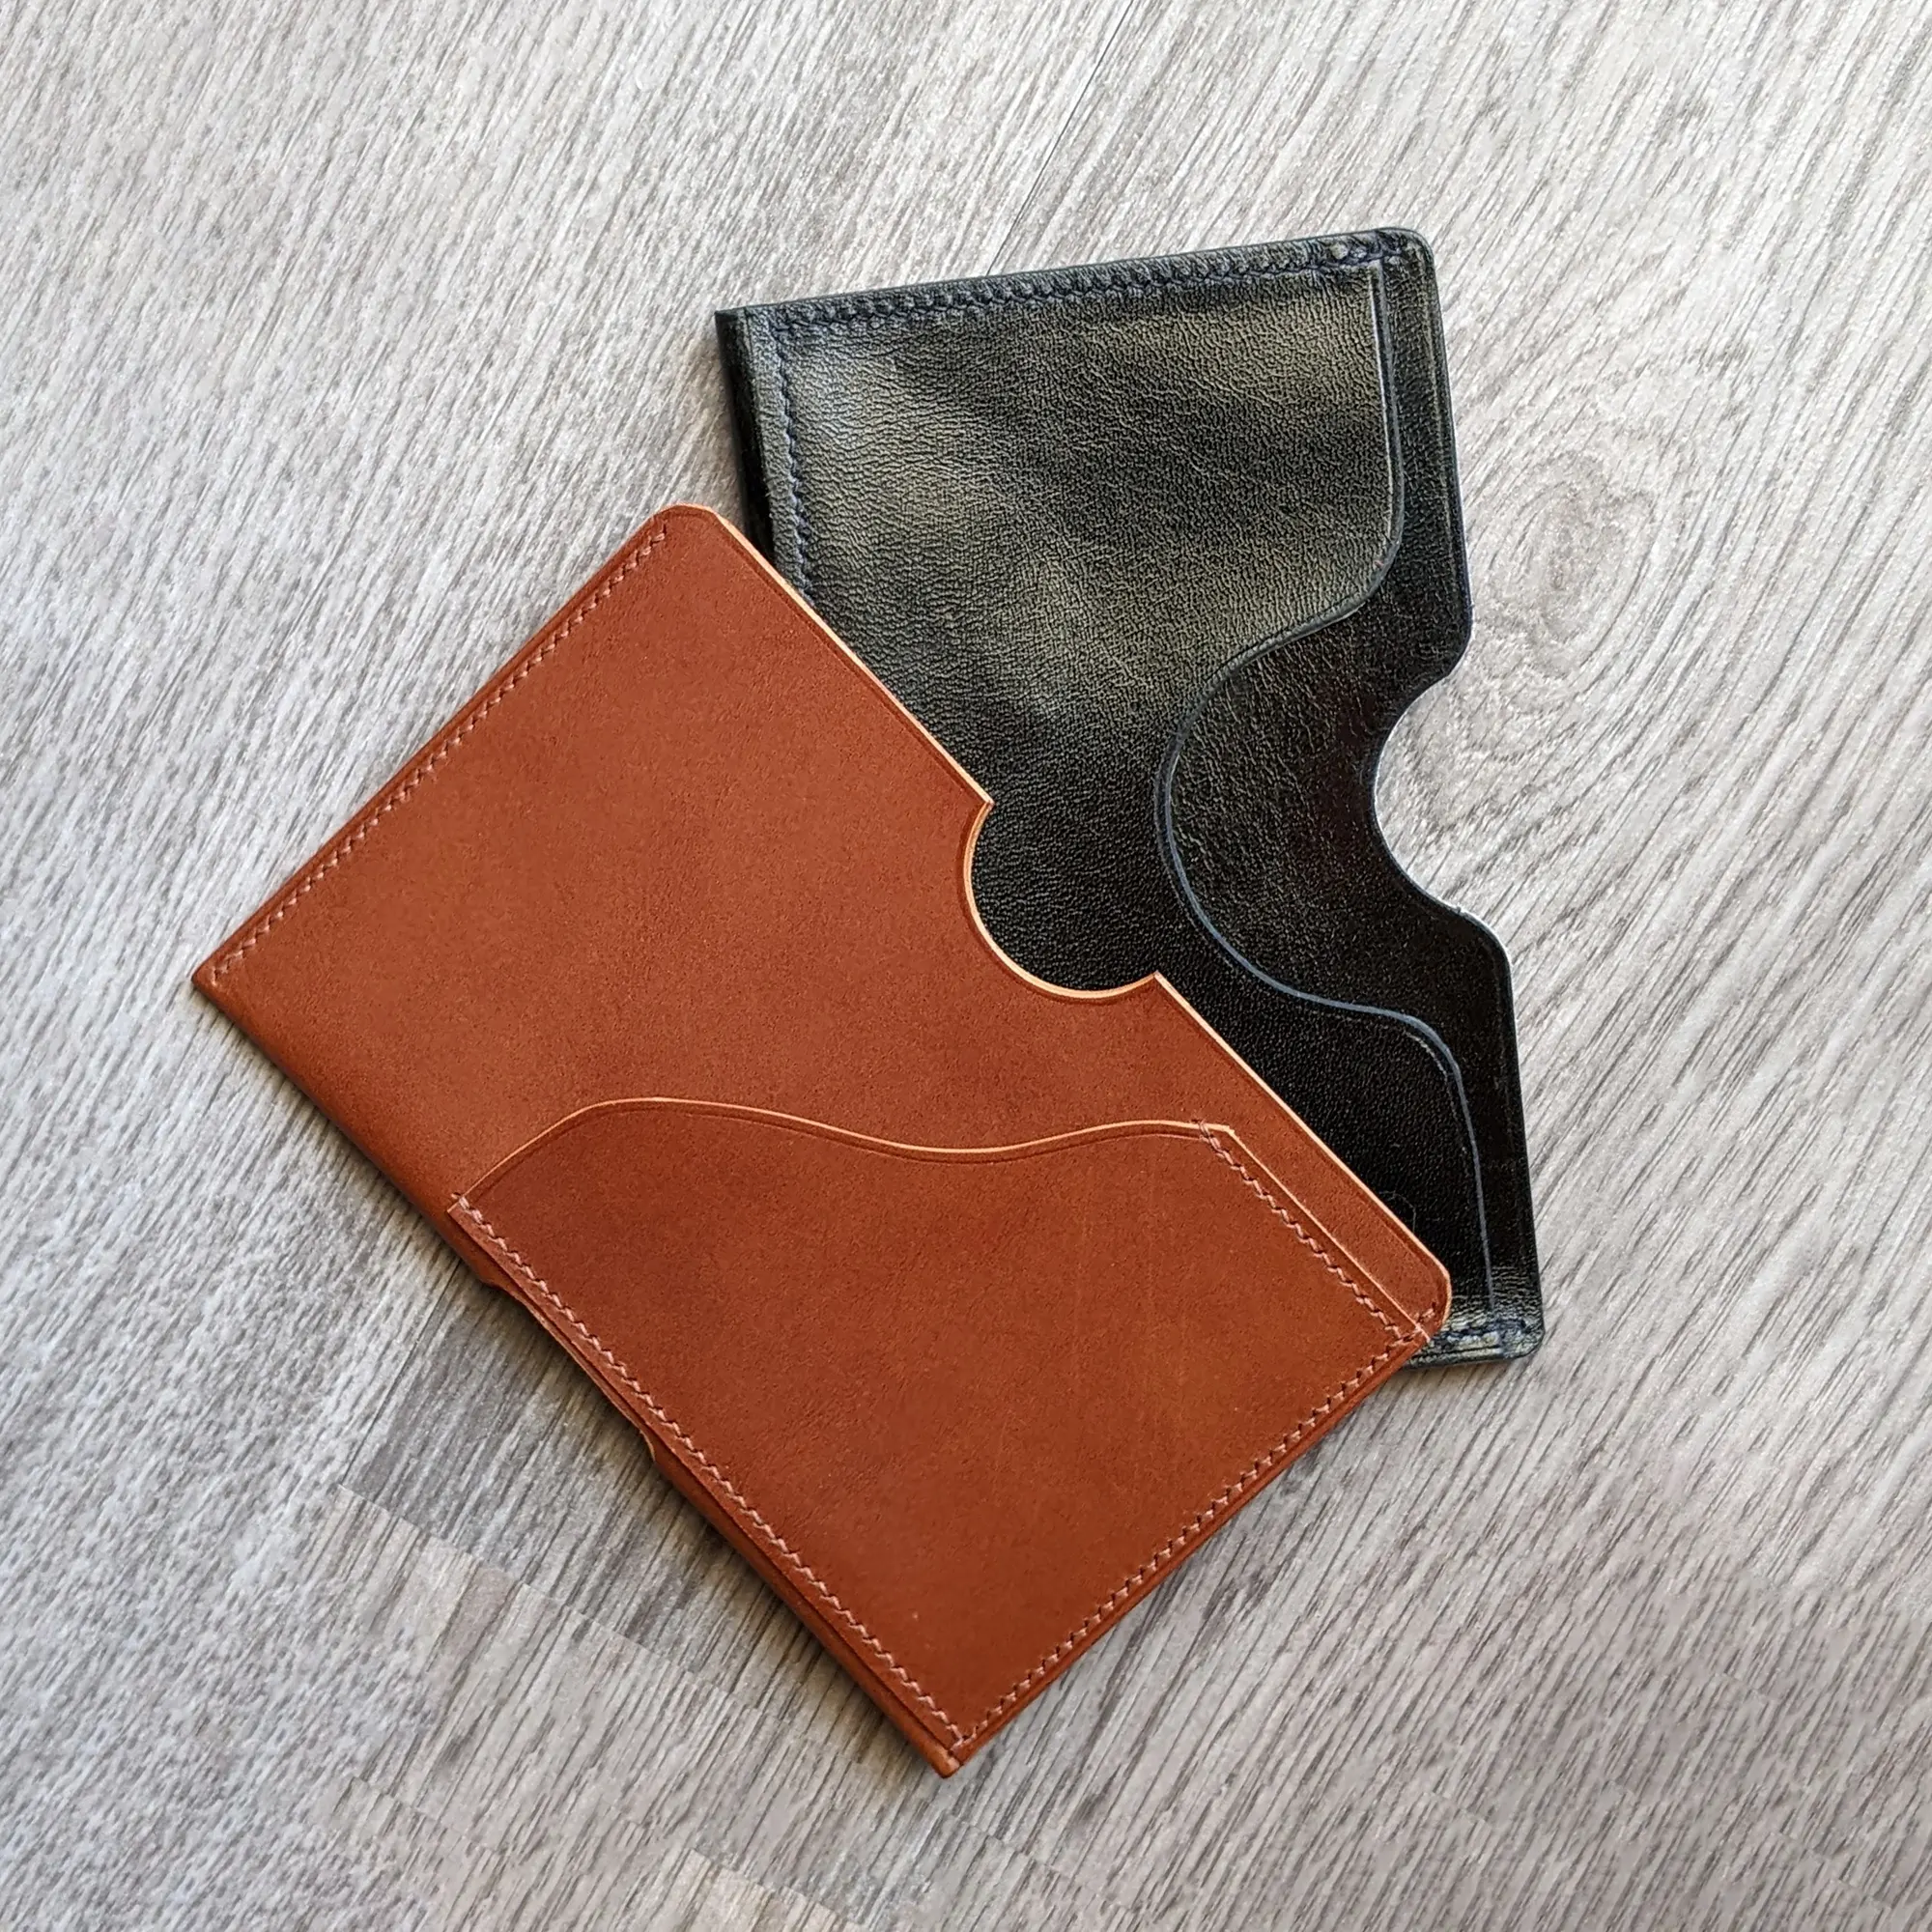 possala designs handmade passport wallet sleeve